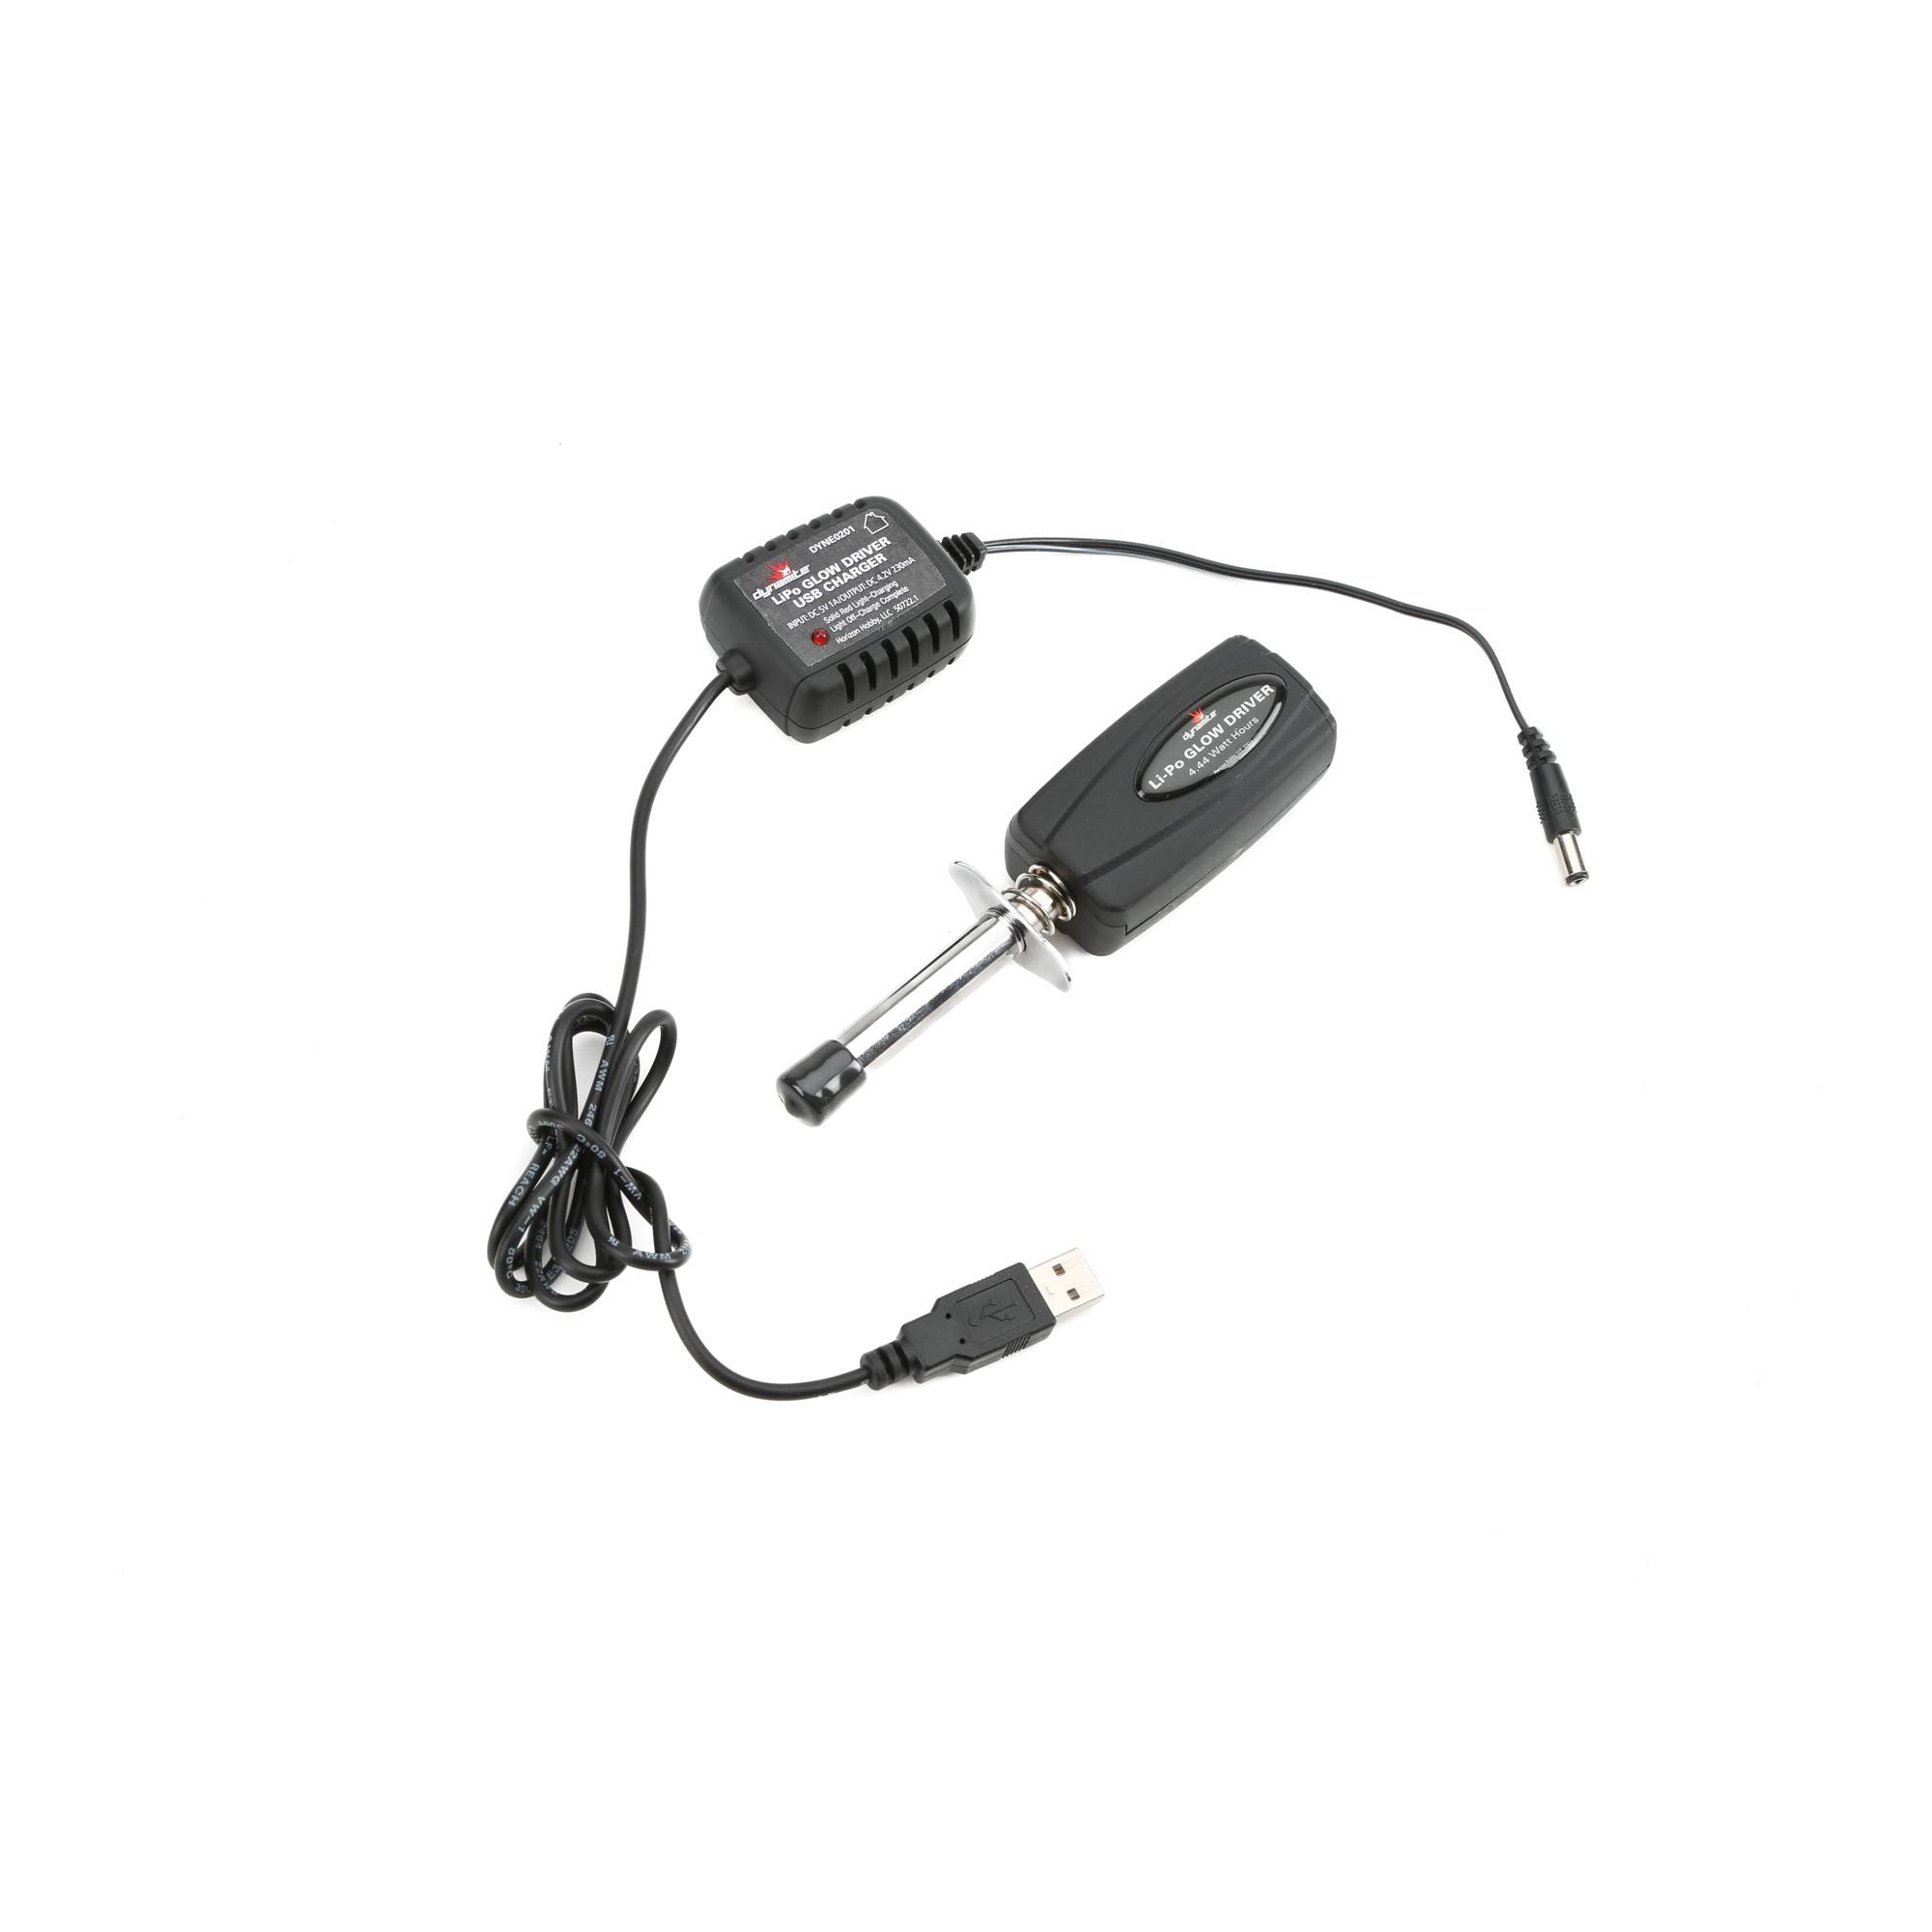 Dynamite Dyne0201 Lipo Glow Driver w/ Batt & USB Charger